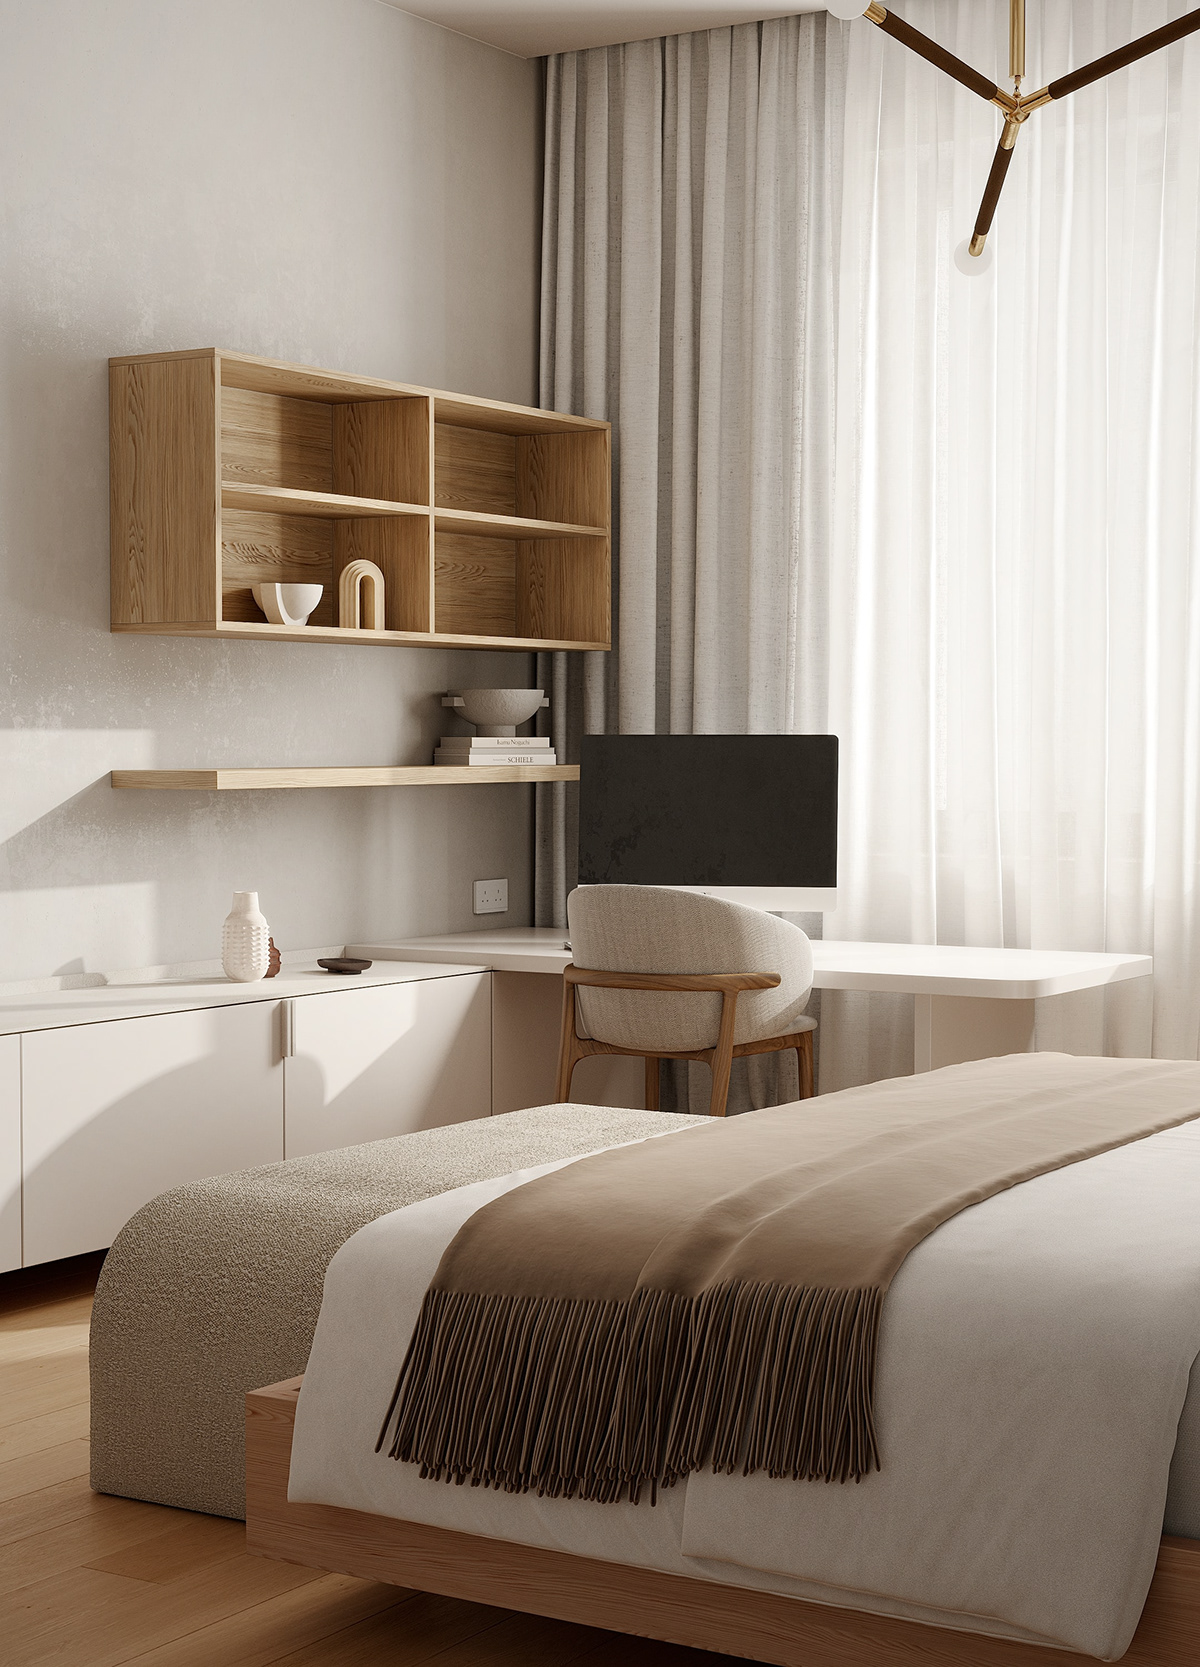 furniture interior design  architecture master bedroom bathroom living room kitchen visualization